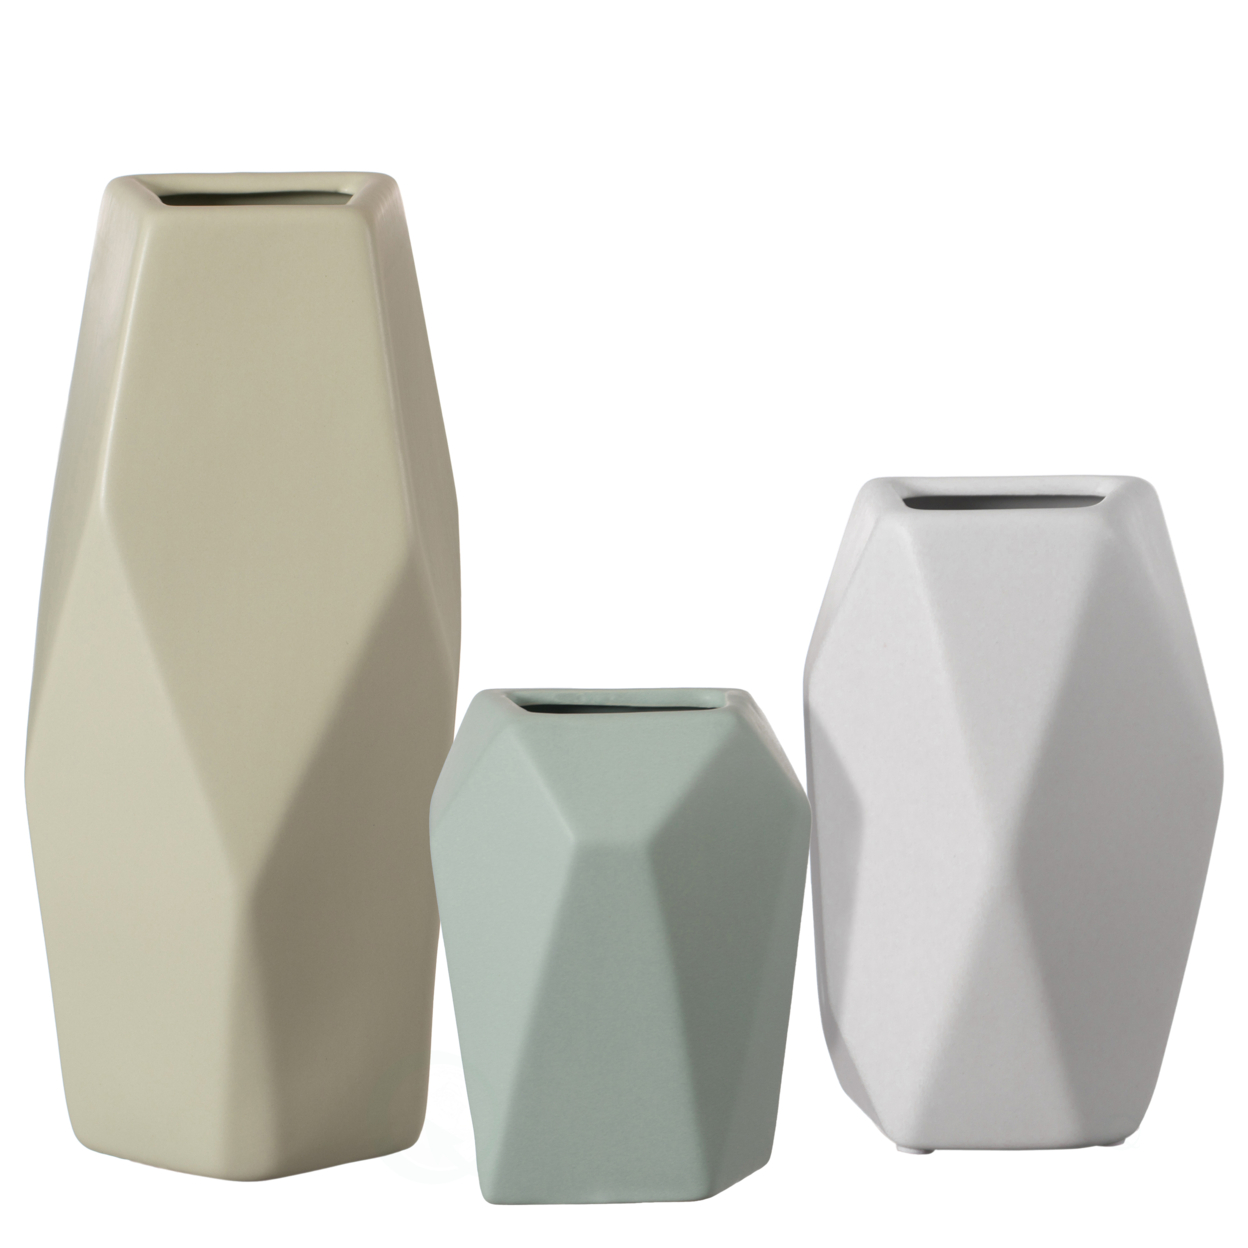 Decorative Ceramic Multi Paned Vase, Modern Style Centerpiece Table Vase - Multi